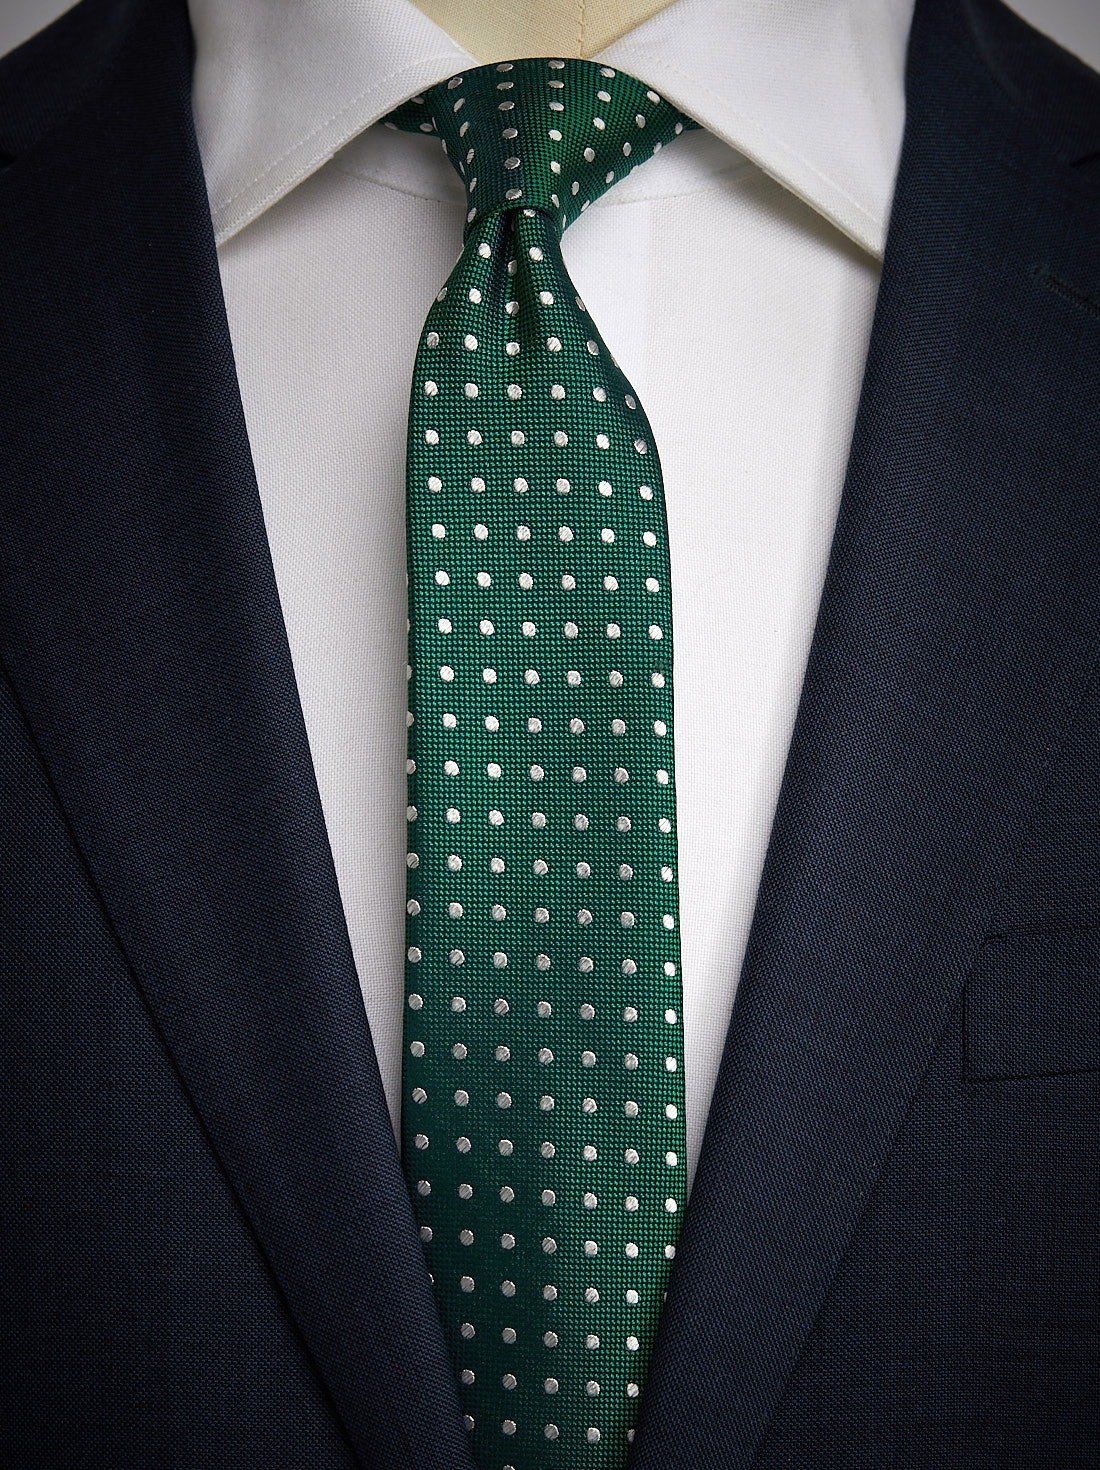 Krawatte mit grünen Punkten